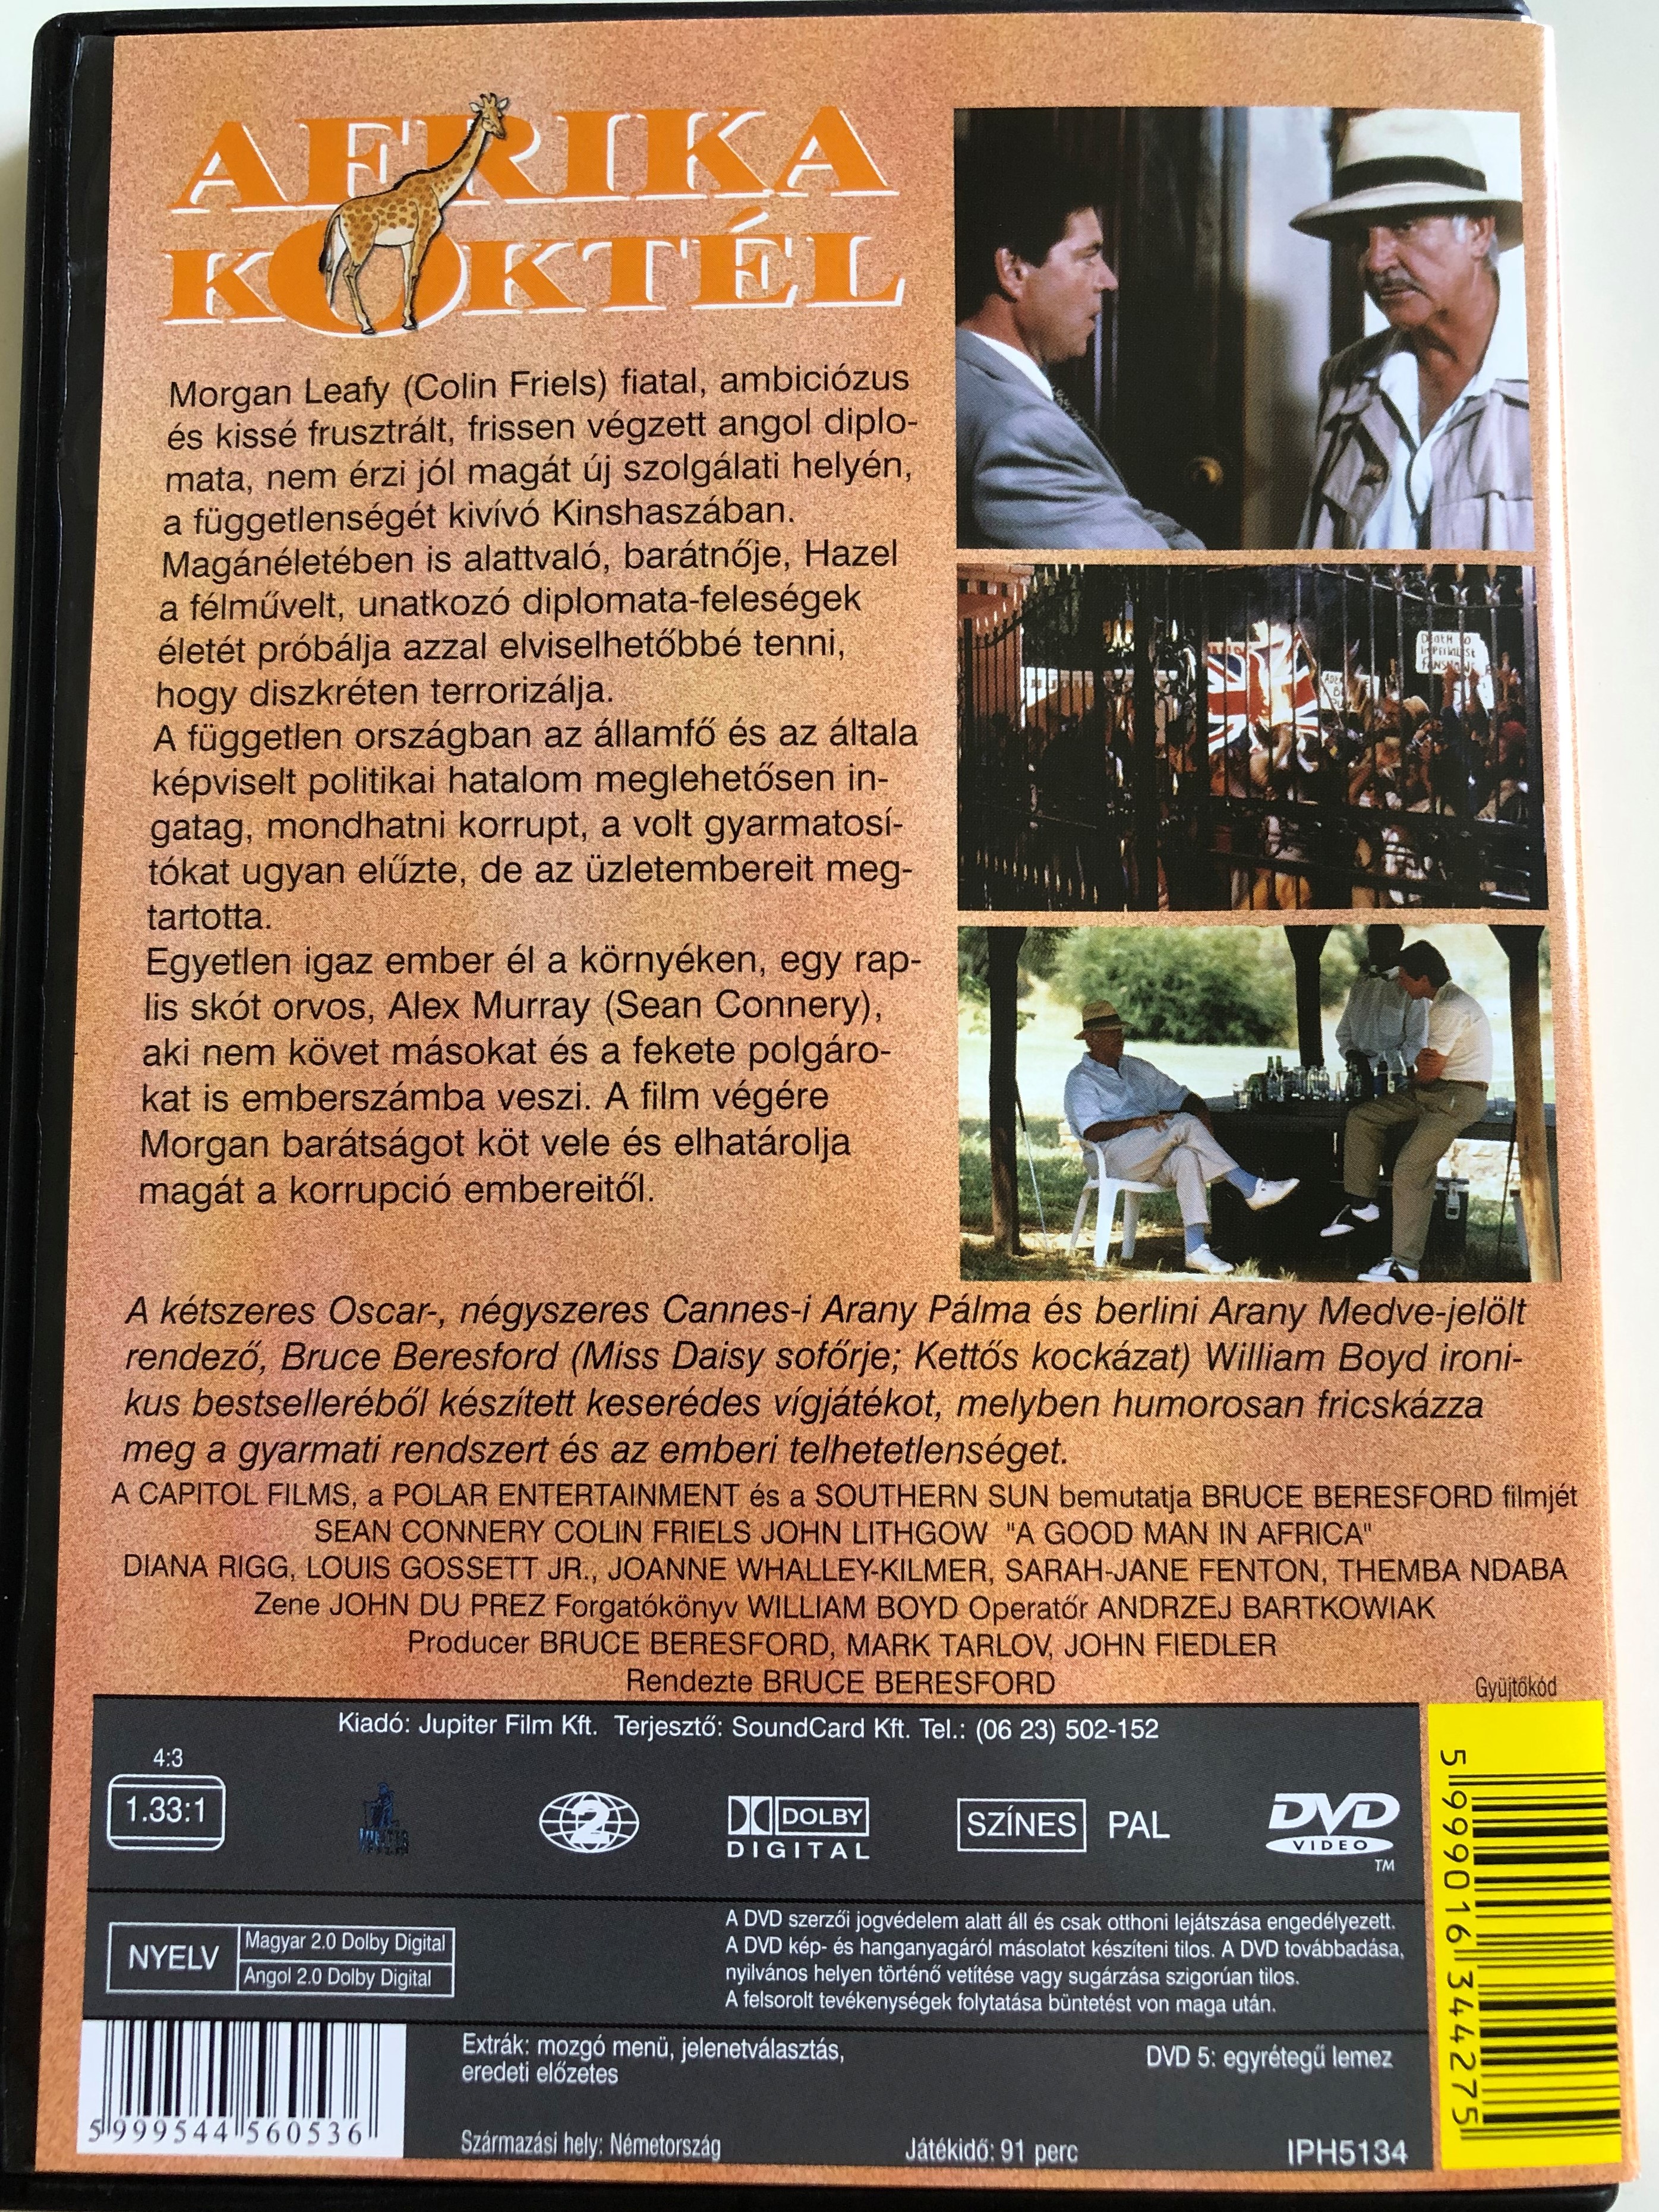 a-good-man-in-africa-dvd-1994-afrika-kokt-l-directed-by-bruce-beresford-starring-colin-friels-joanne-whalley-kilmer-sean-connery-john-lithgow-louis-gossett-jr.-diana-rigg-2-.jpg